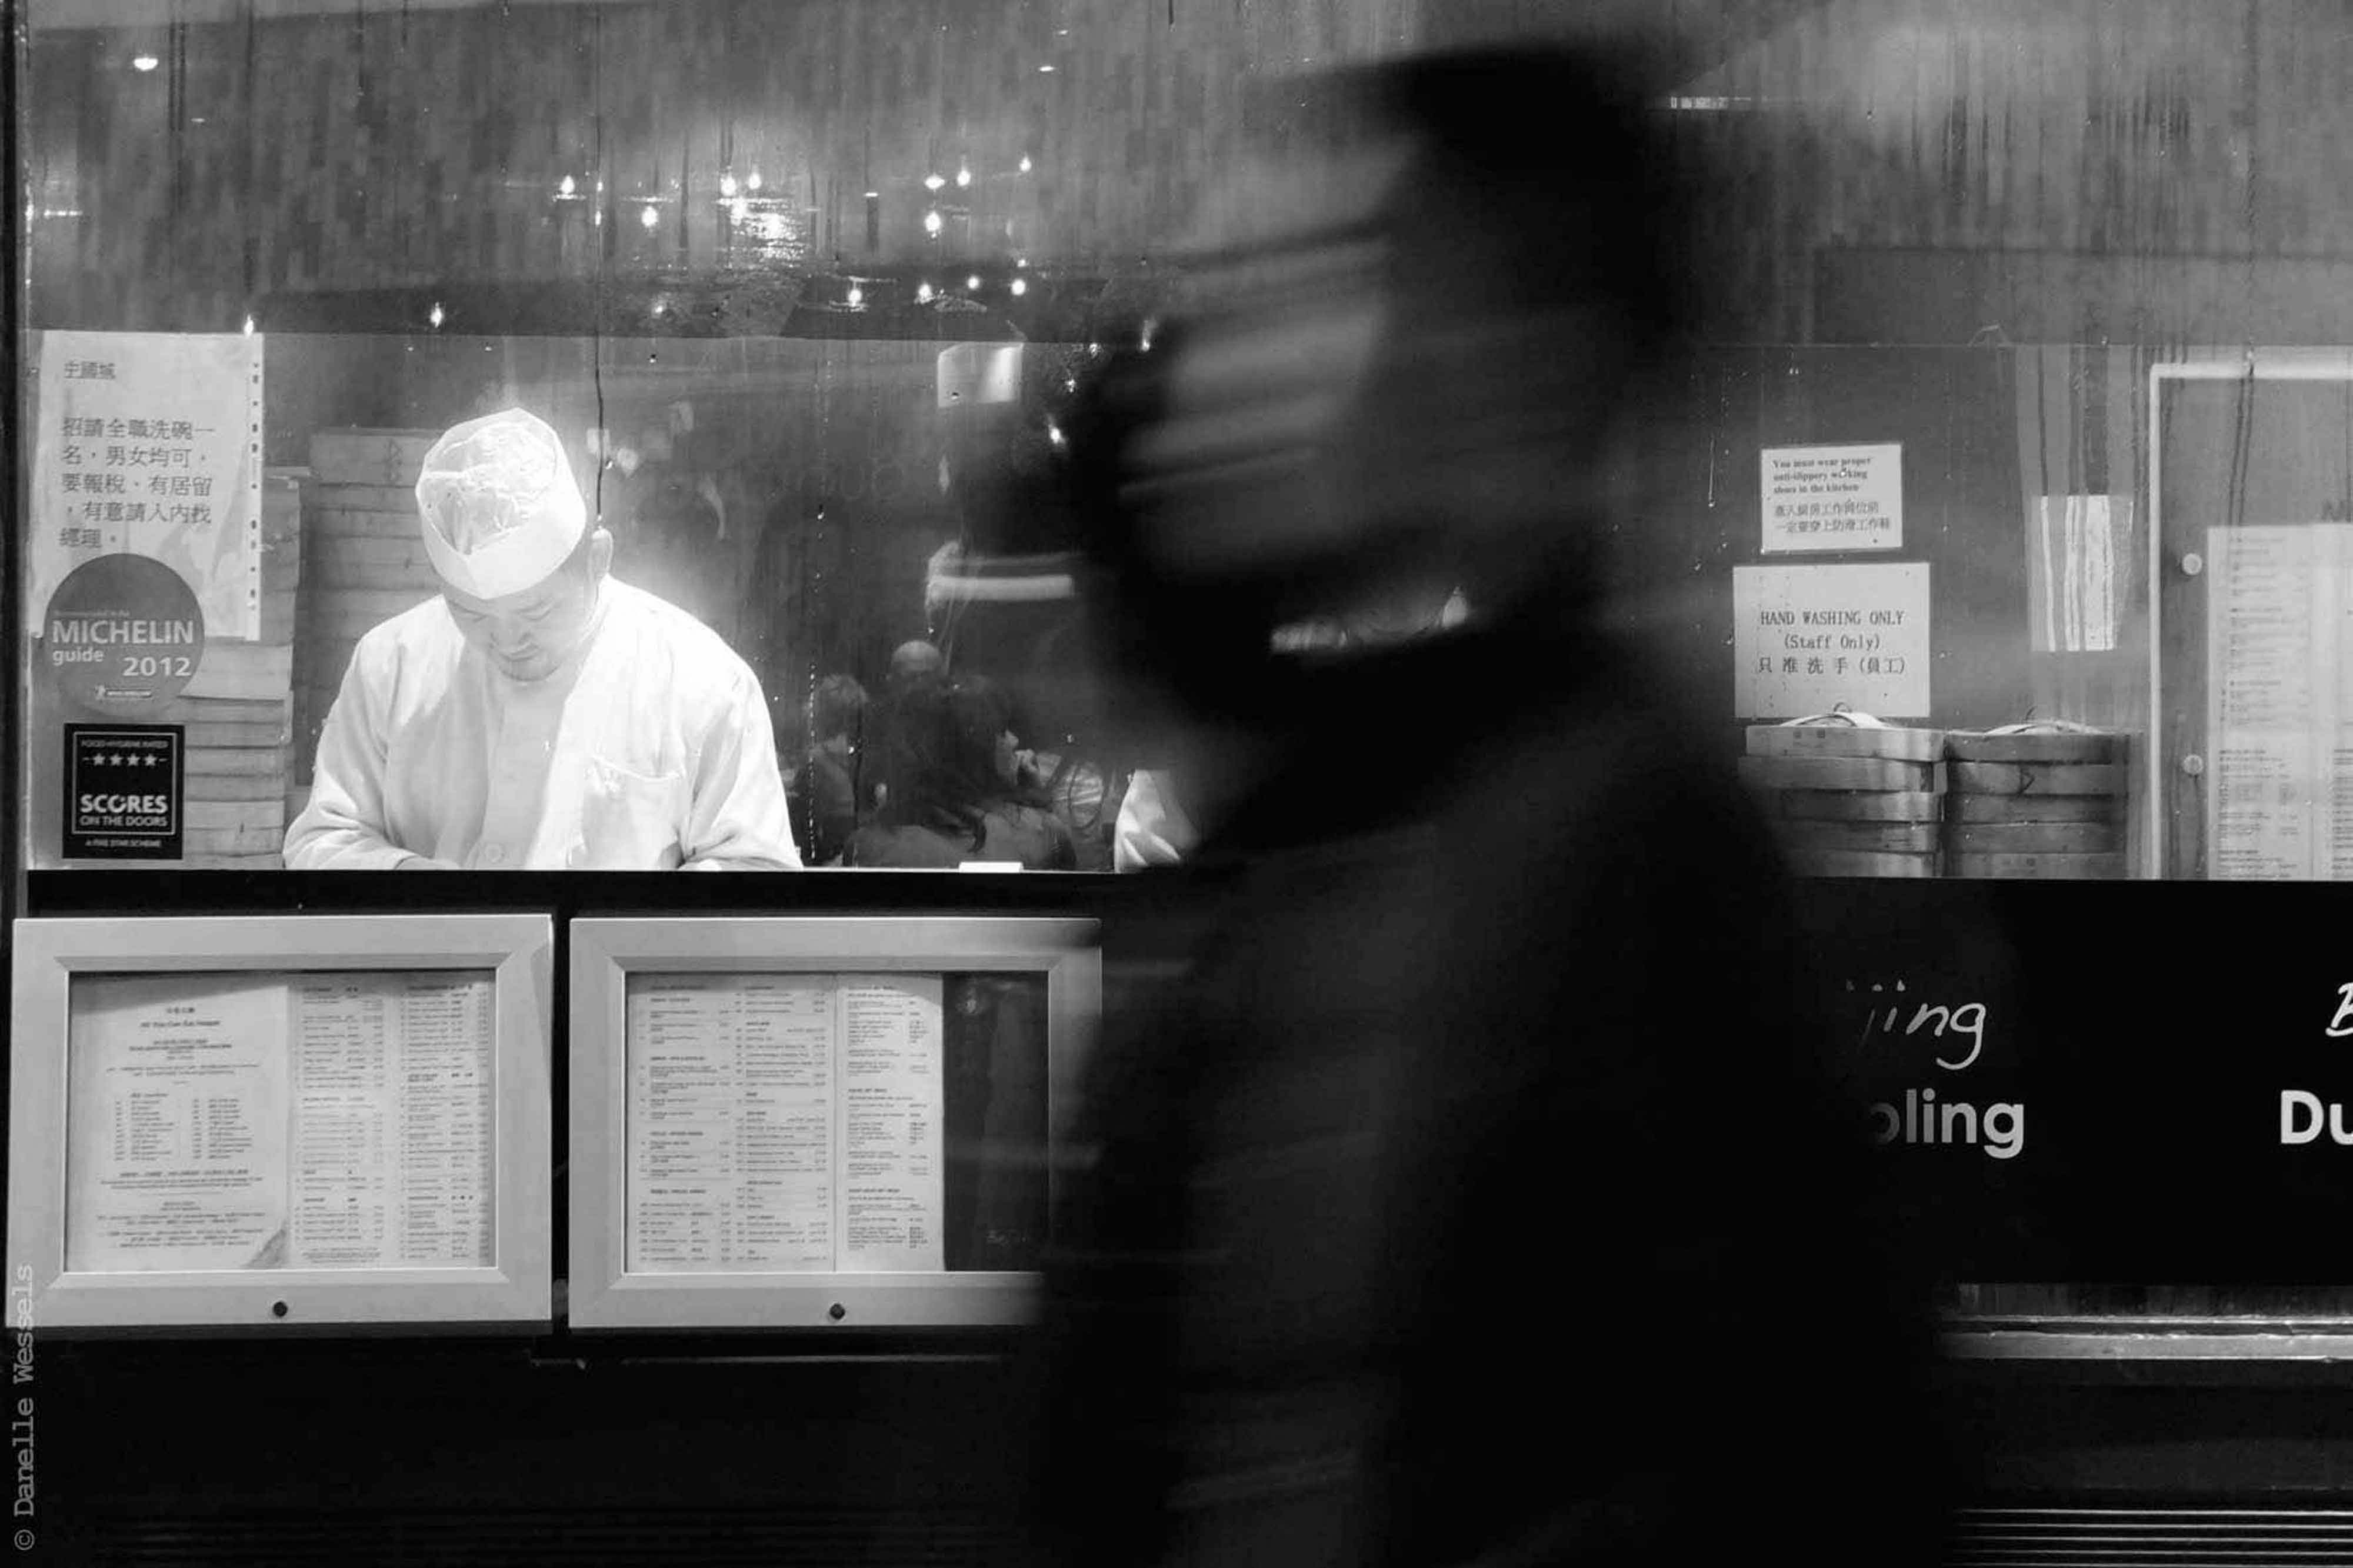 Chinatown restaurants and blur (2b)